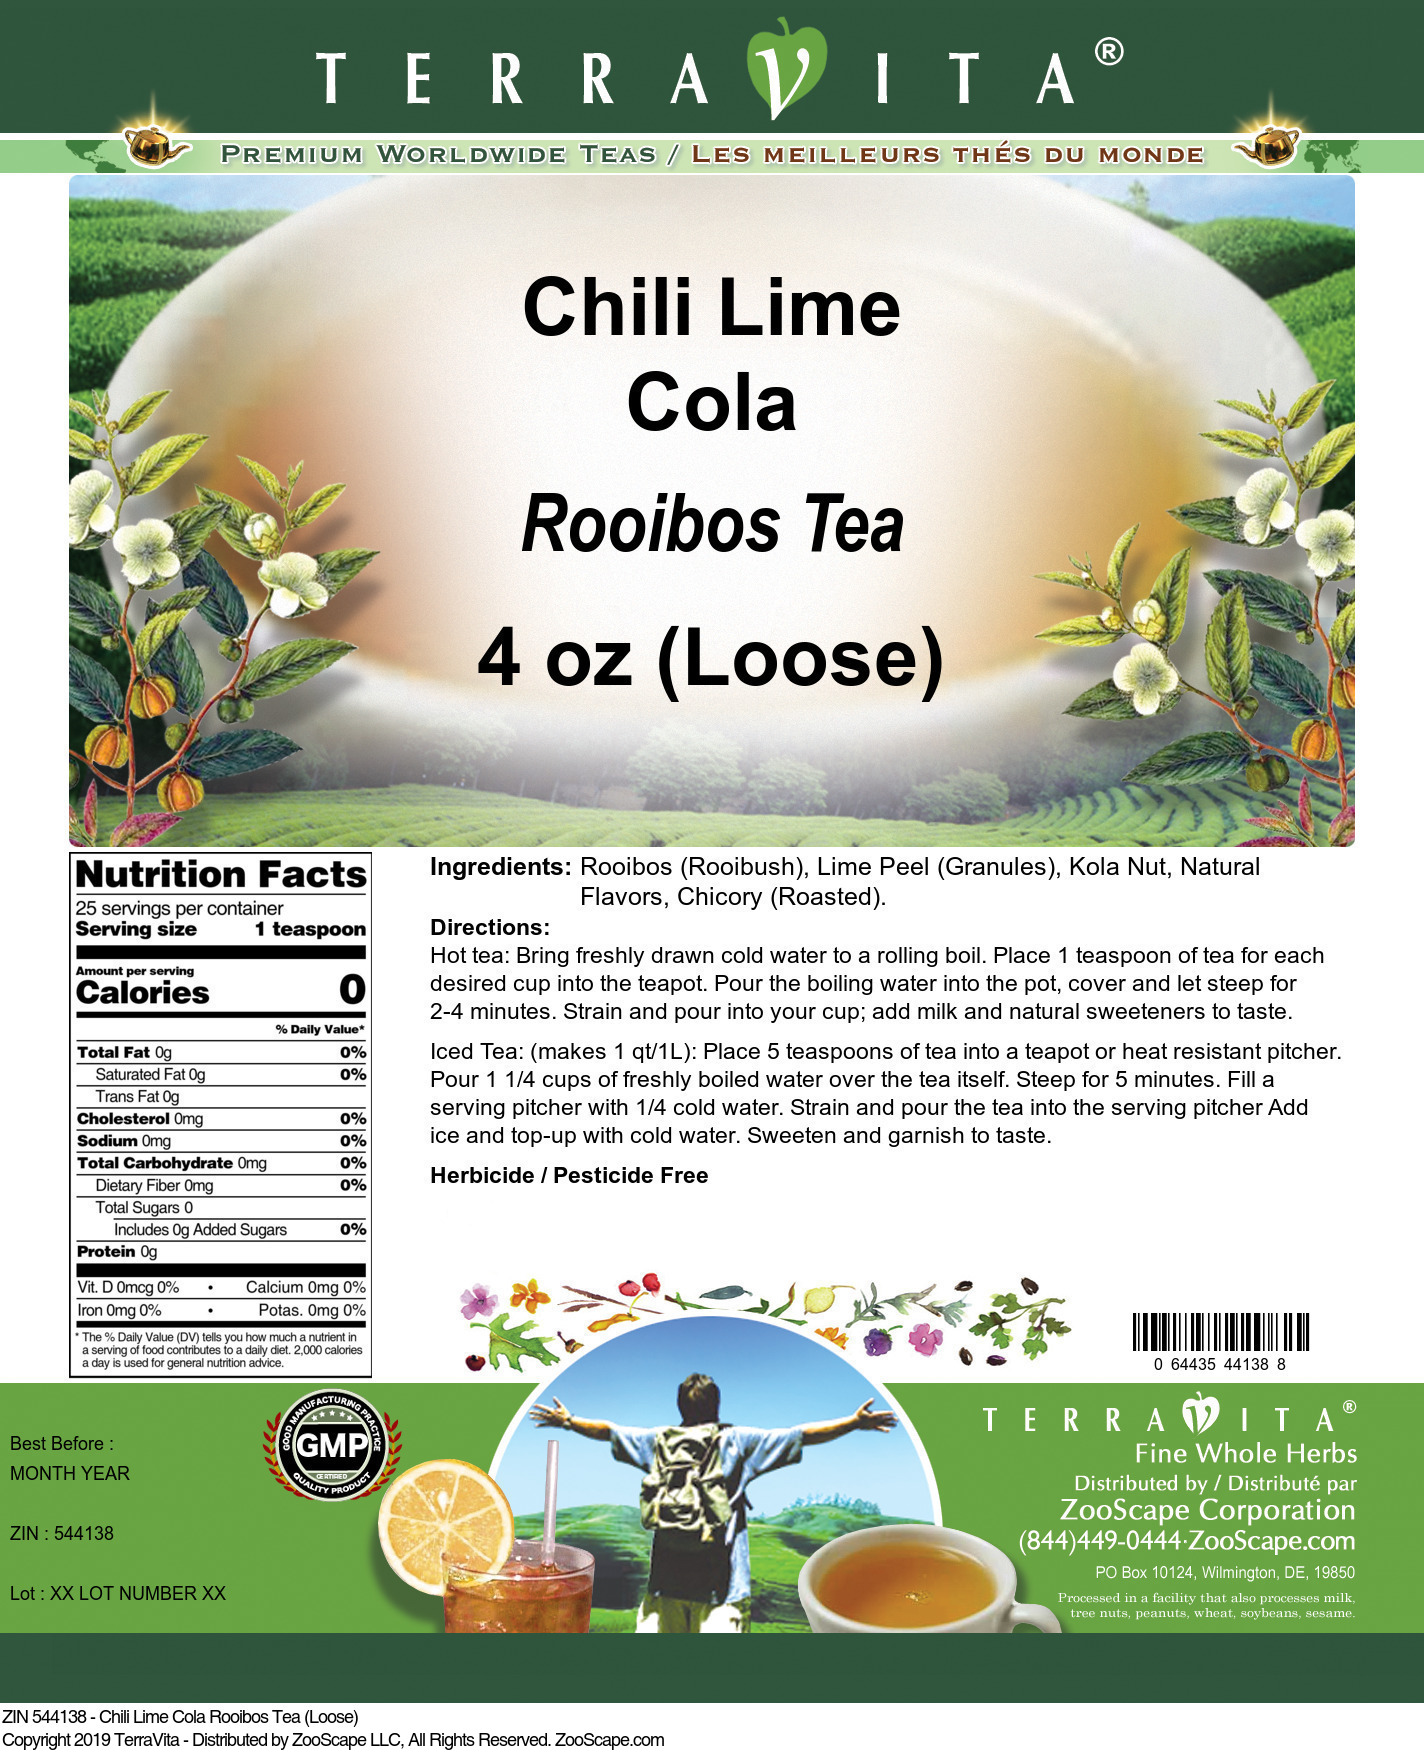 Chili Lime Cola Rooibos Tea (Loose) - Label